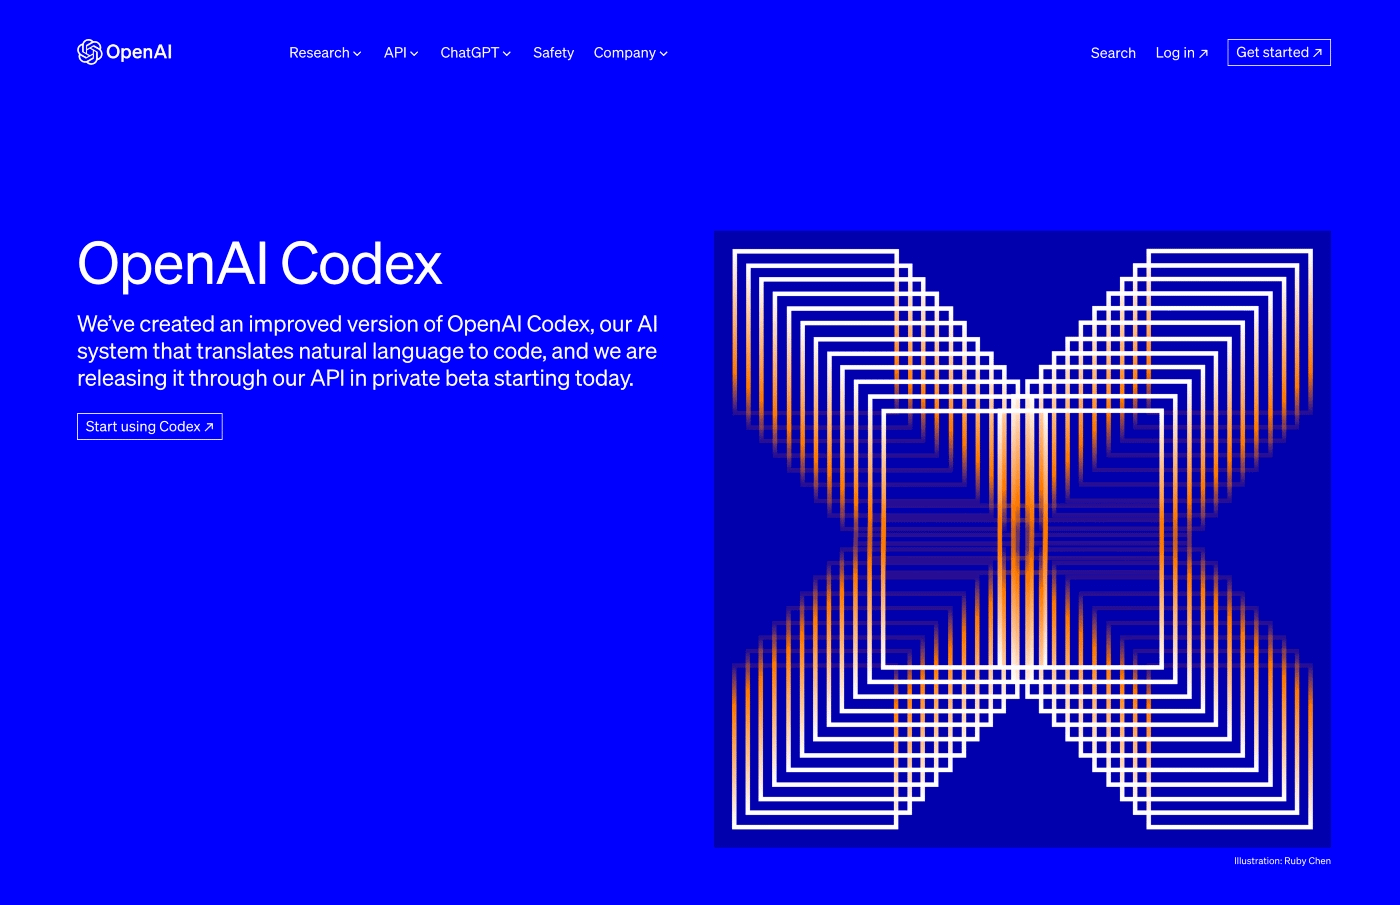 OpenAI Codex homepage.